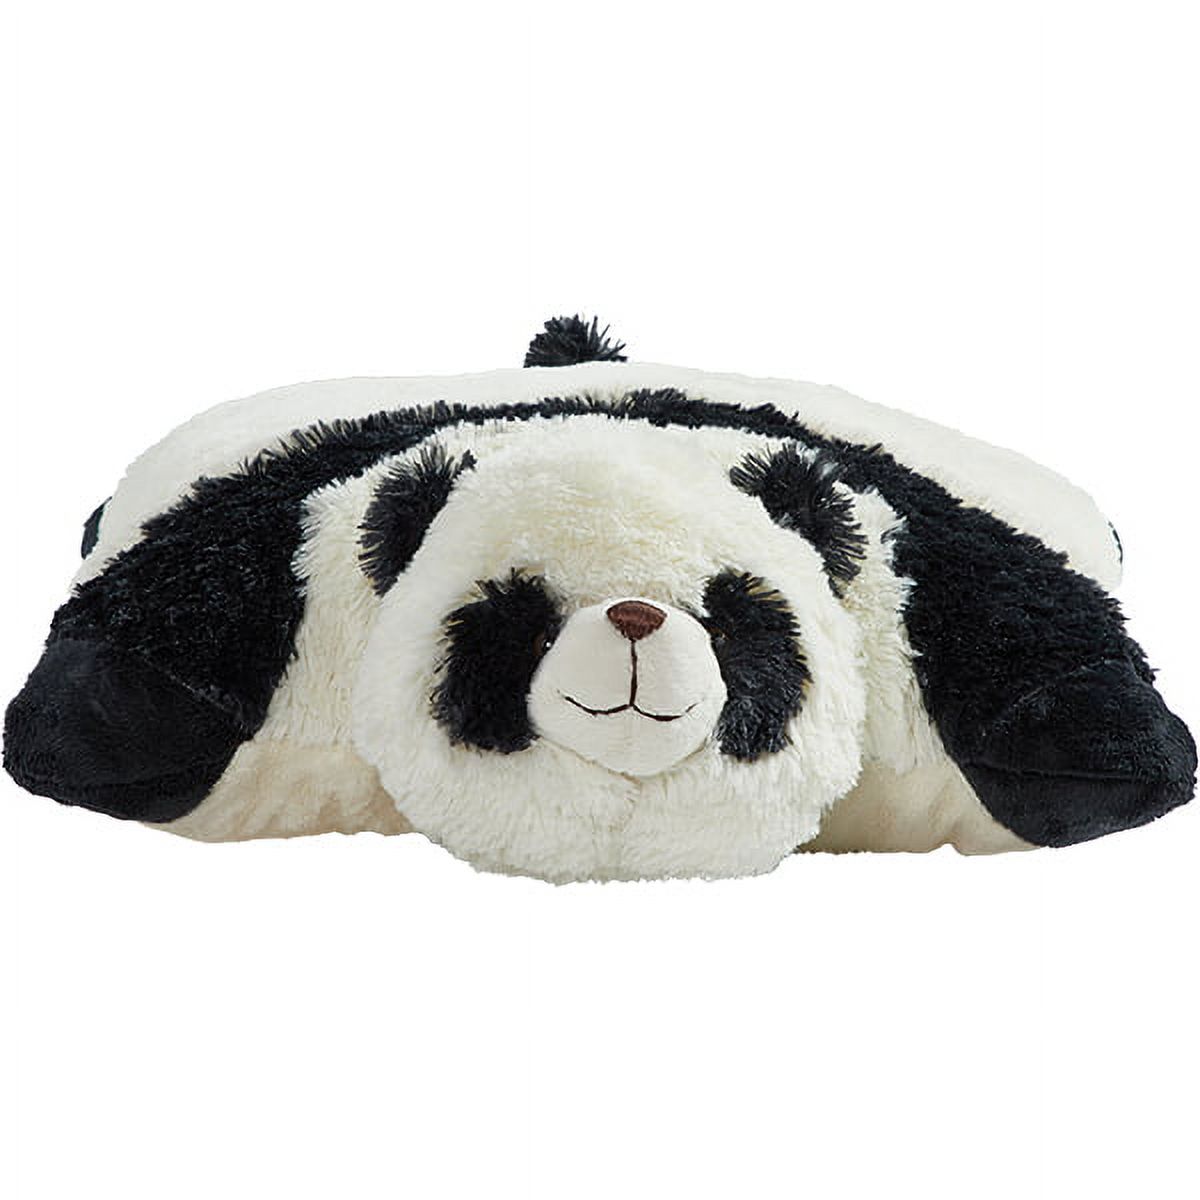 Pillow Pets Signature Comfy 18" Panda Stuffed Animal - image 2 of 3